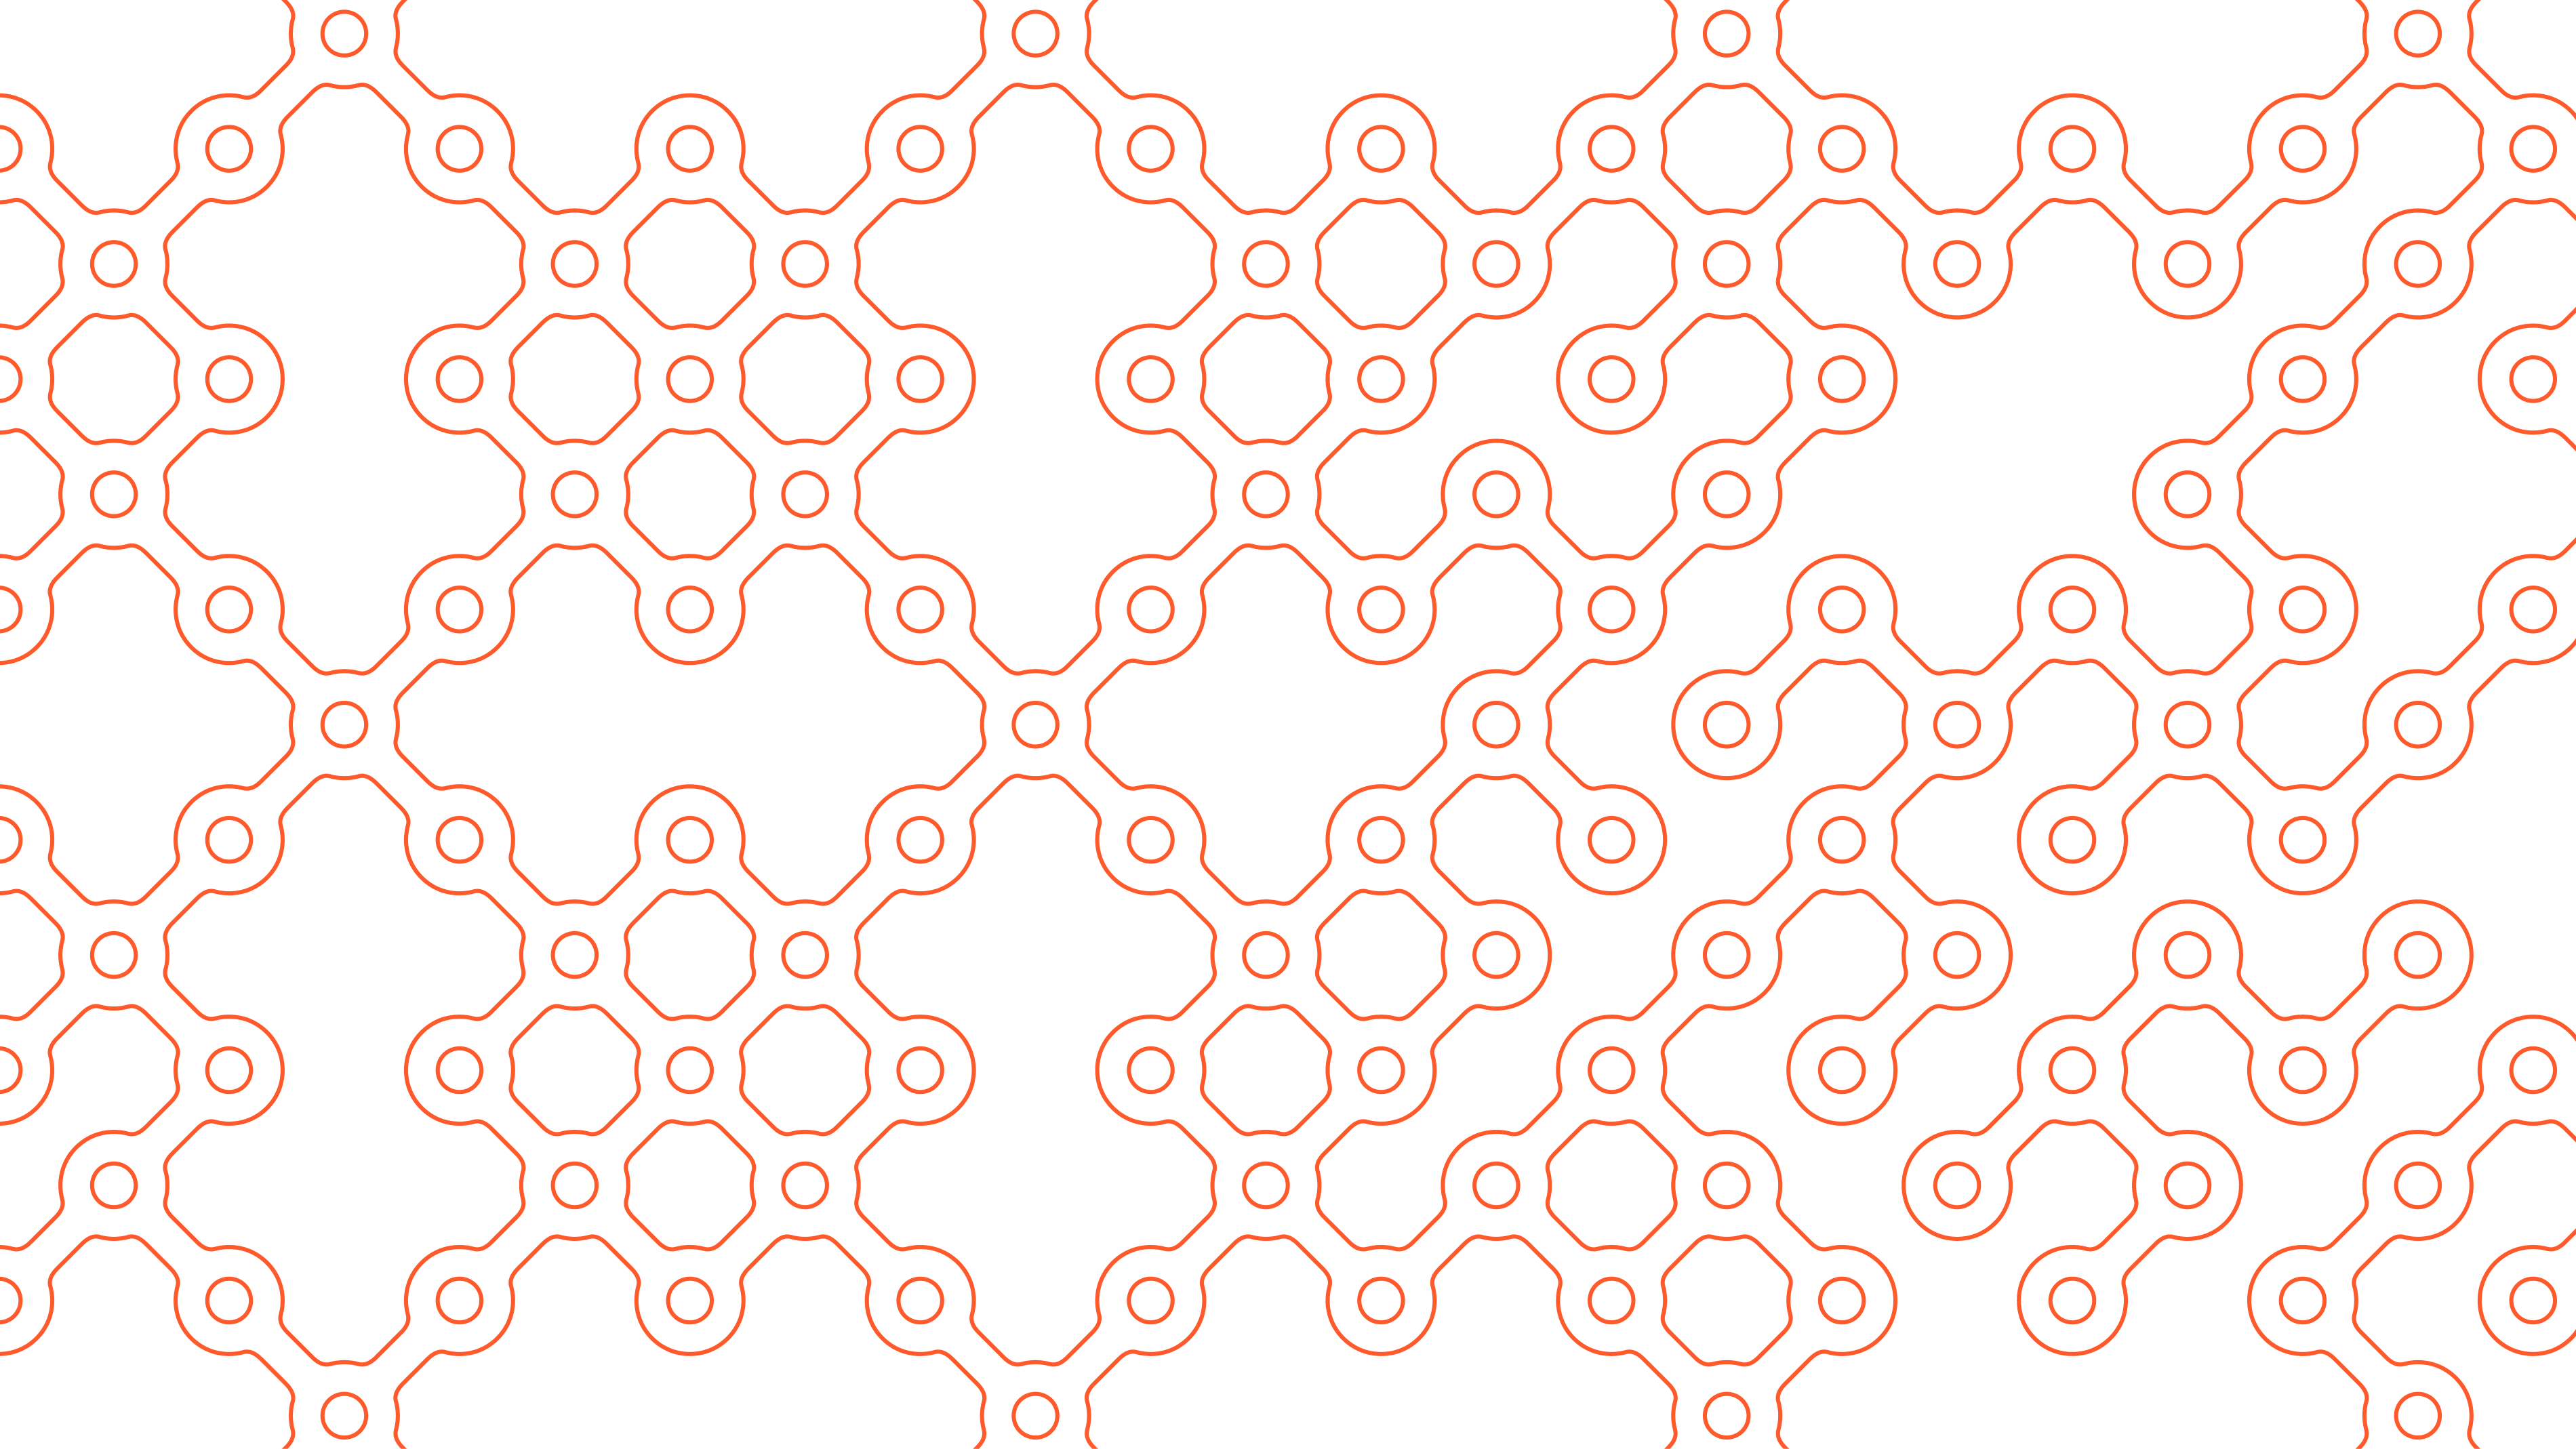 aura-11-identity-micro-pattern-3800